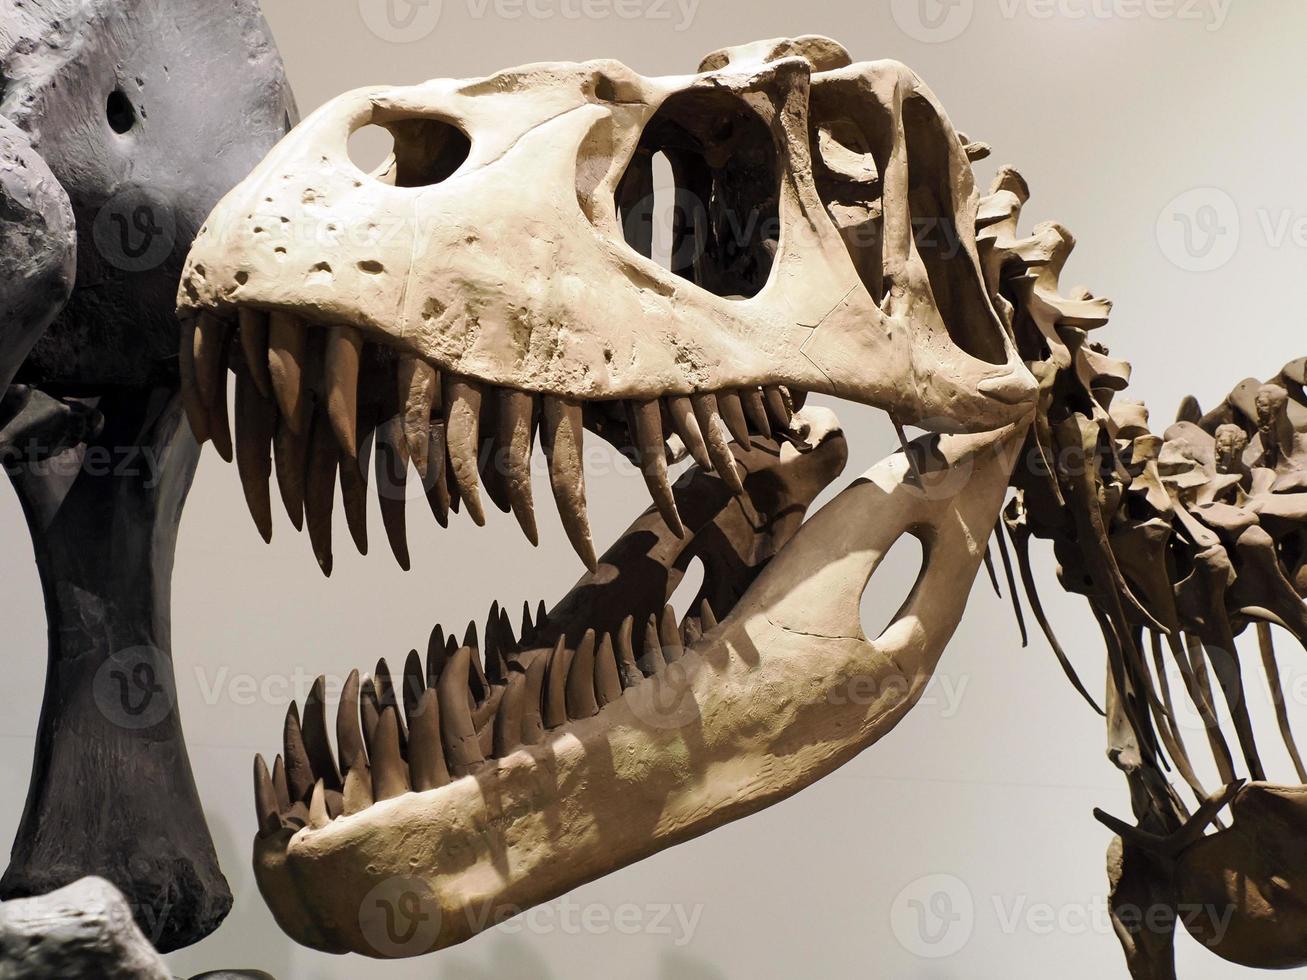 plesiosauriërs dinosaurus skelet schedel detail foto